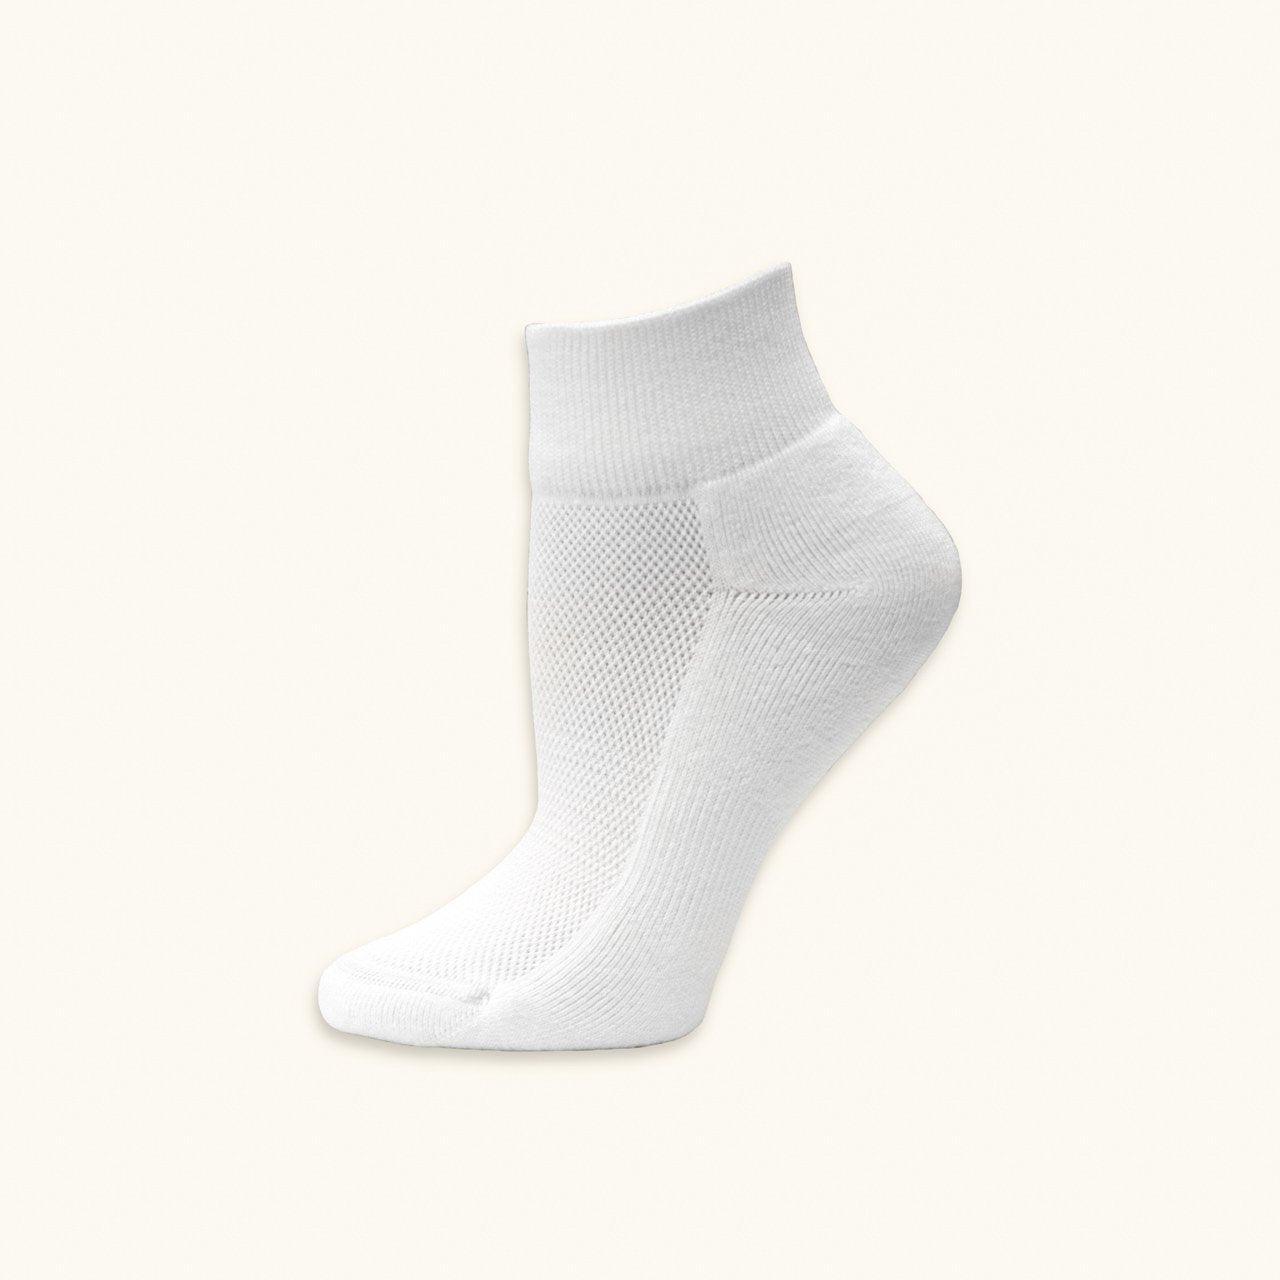 Sport Sock, 74.4% Organic Cotton, Quarter Crew - Maggie's Organics - The Sock Monster